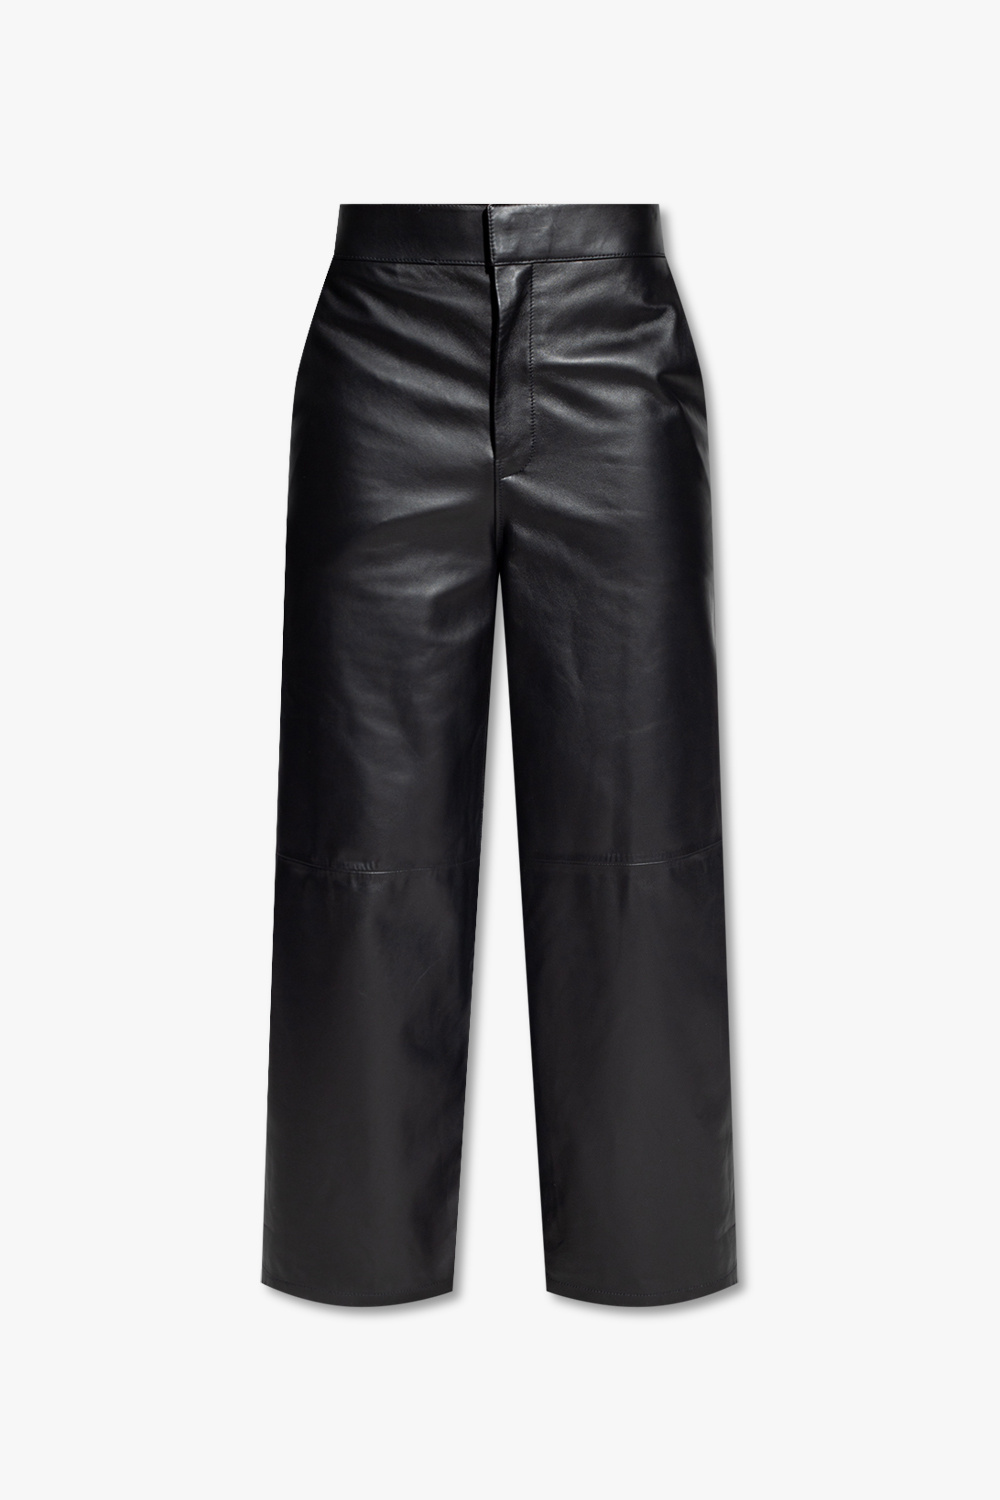 Loewe Leather straight leg trousers